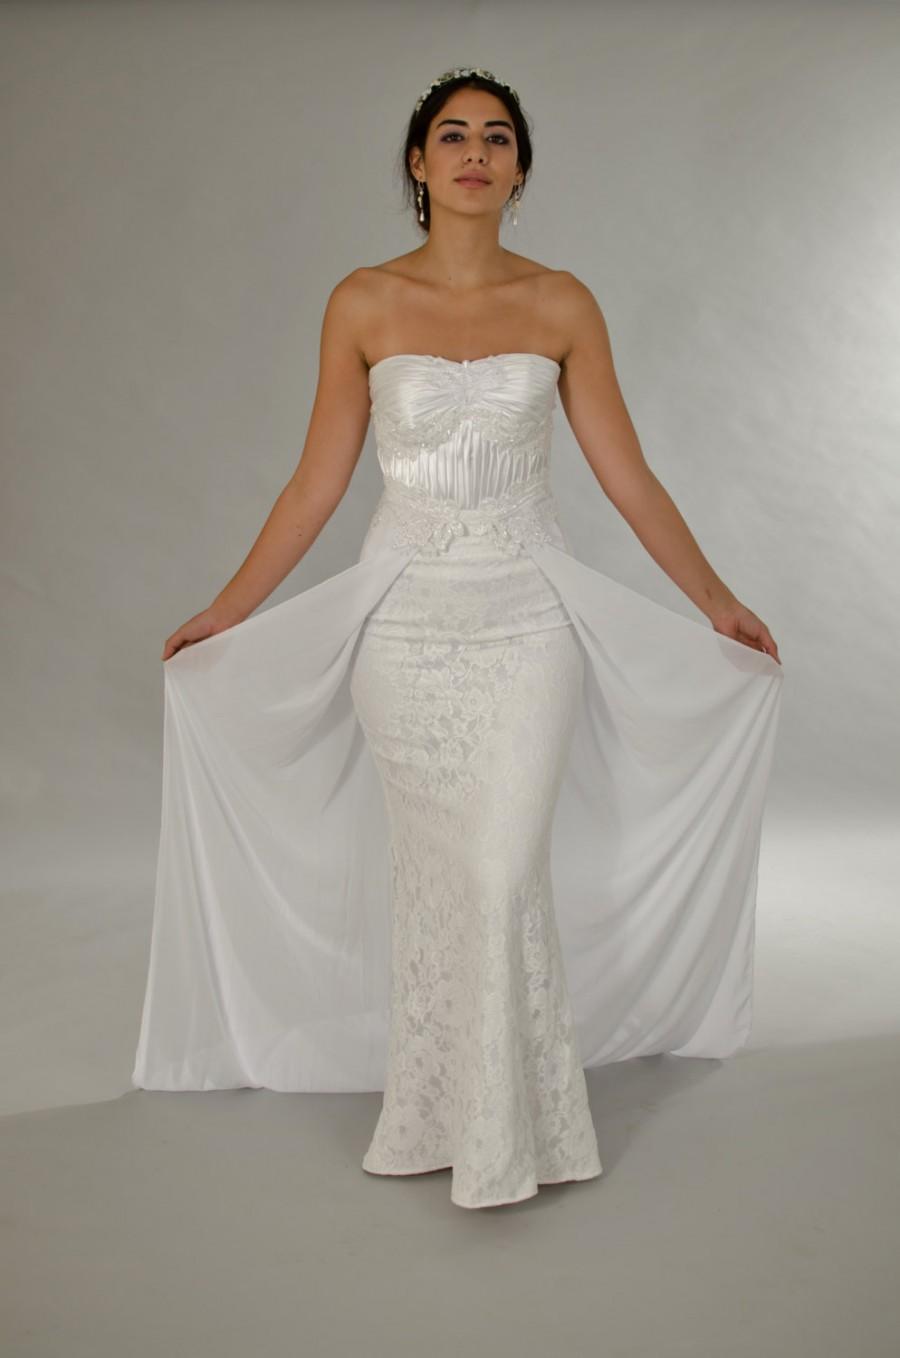 Mariage - Classic wedding dress, Lace wedding dress, White dress, Wedding dress, Bridal dress.